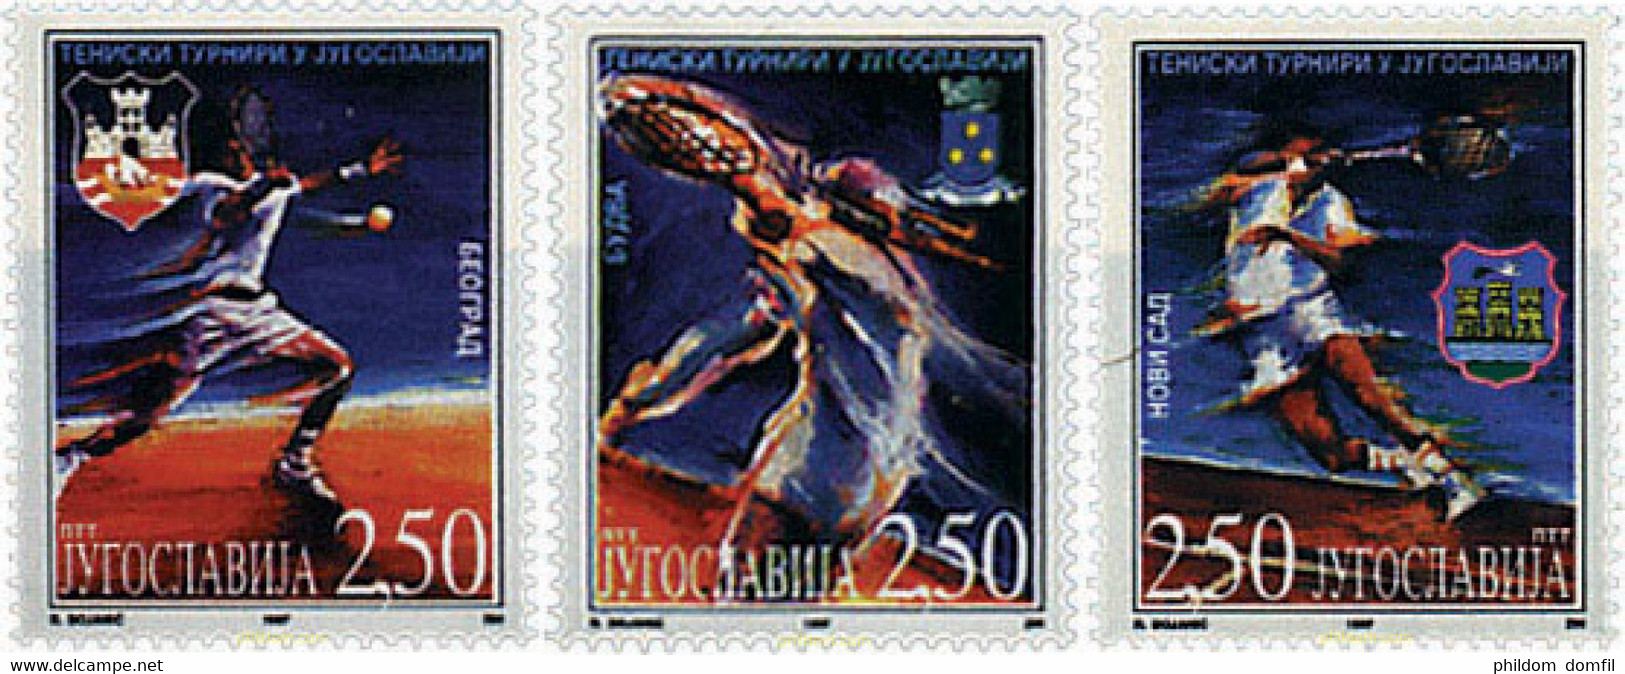 48084 MNH YUGOSLAVIA 1997 TORNEO DE TENIS EN YUGOSLAVIA - Usados